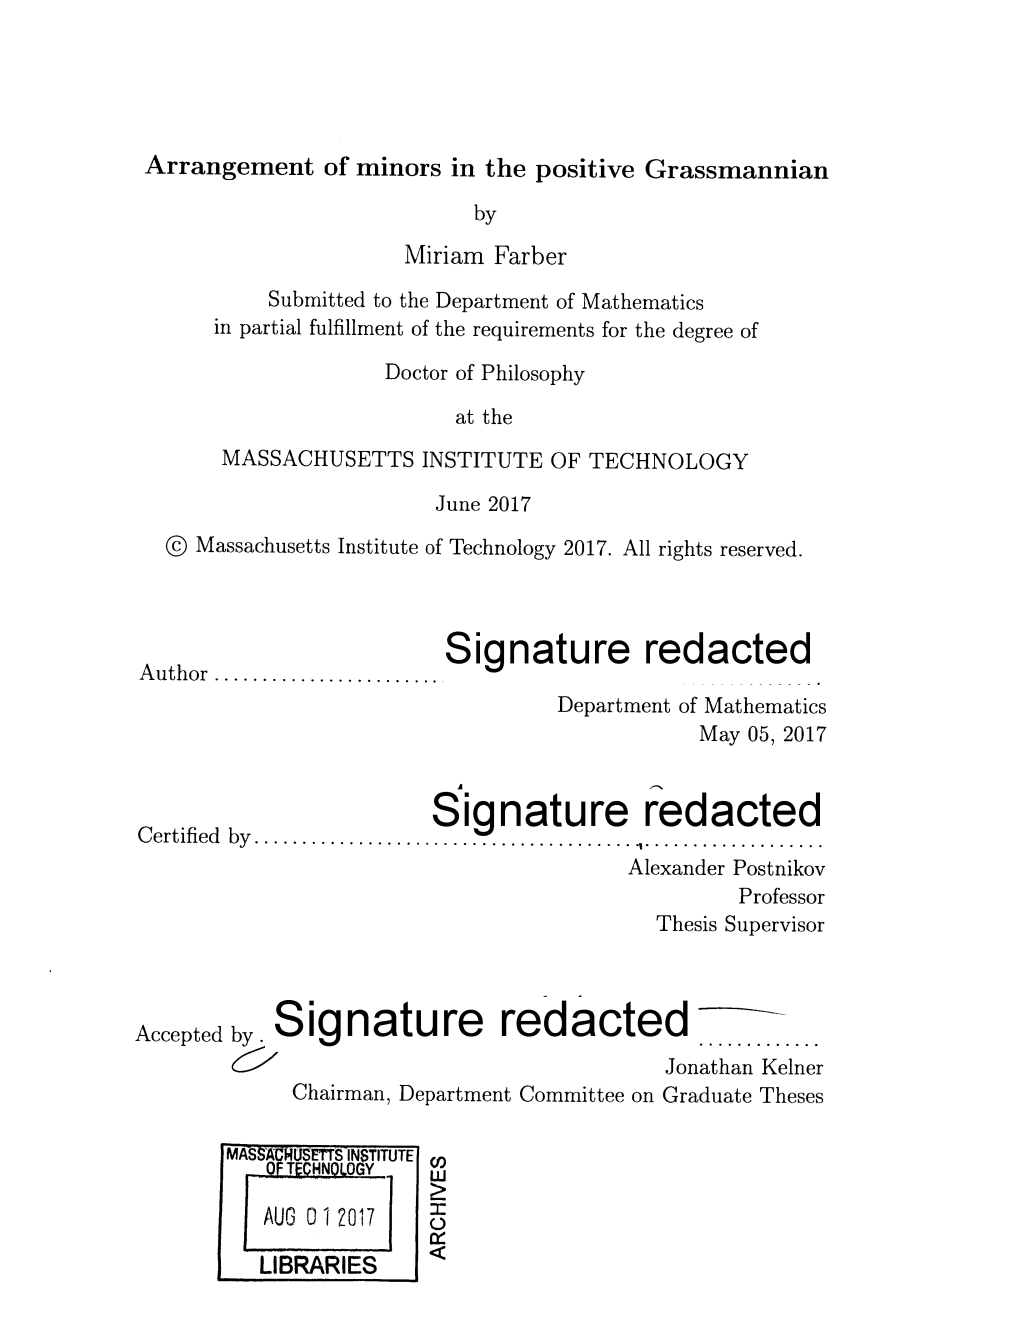 Signature Red Acted Signature Redacted